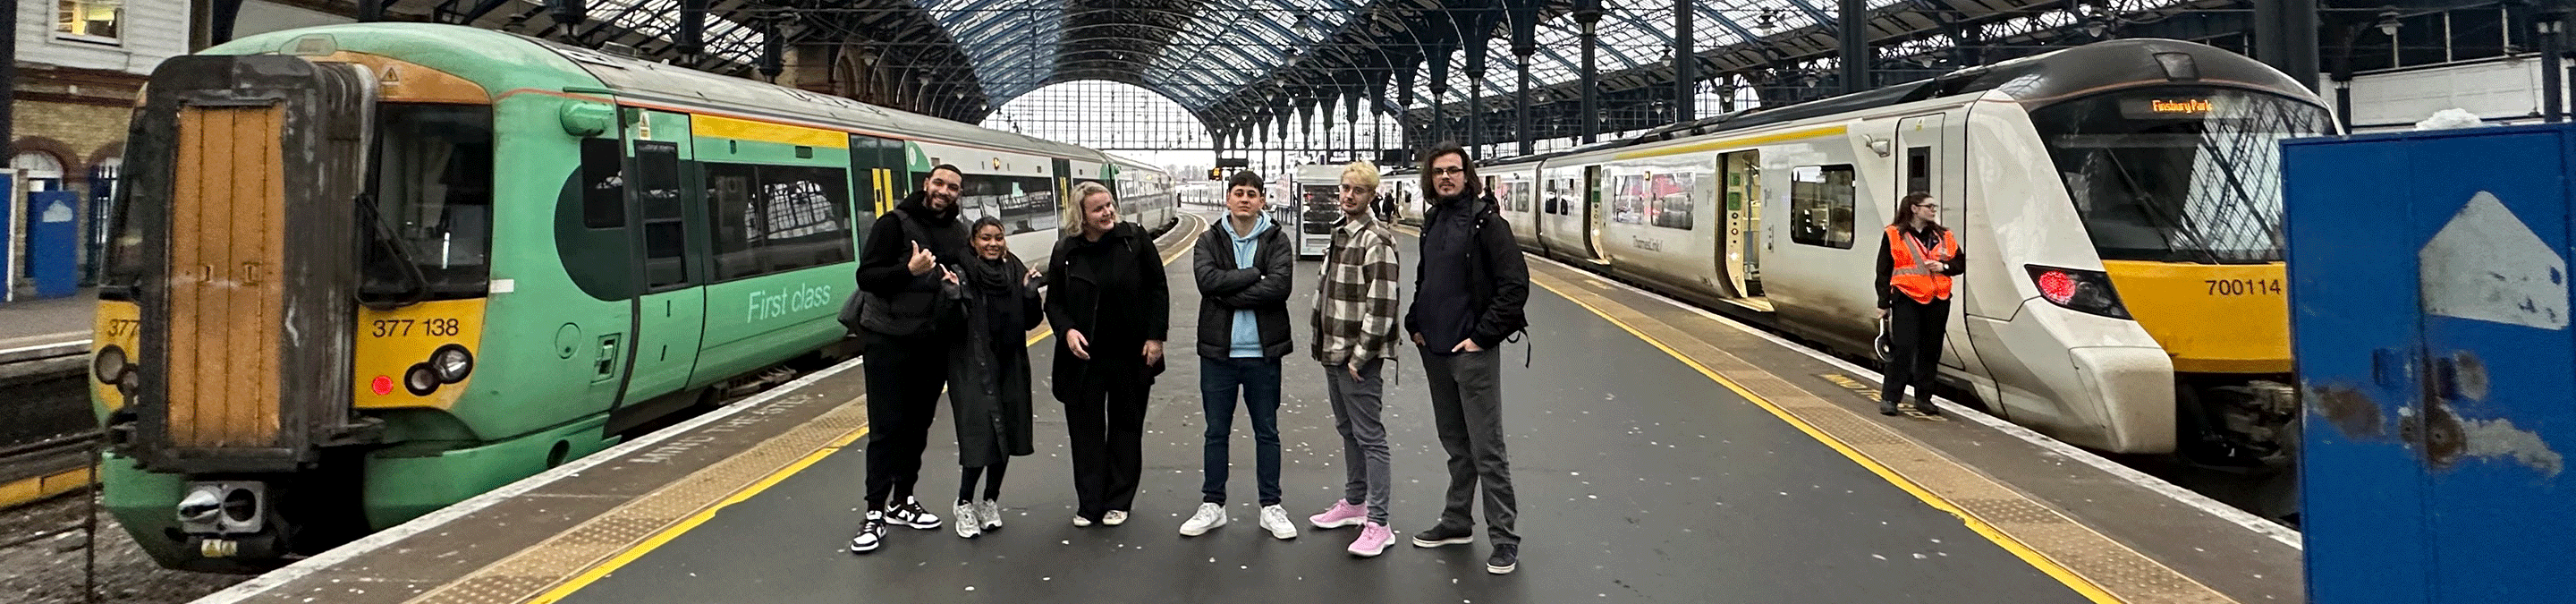 Destination Dash teams standing on a Brighton train station